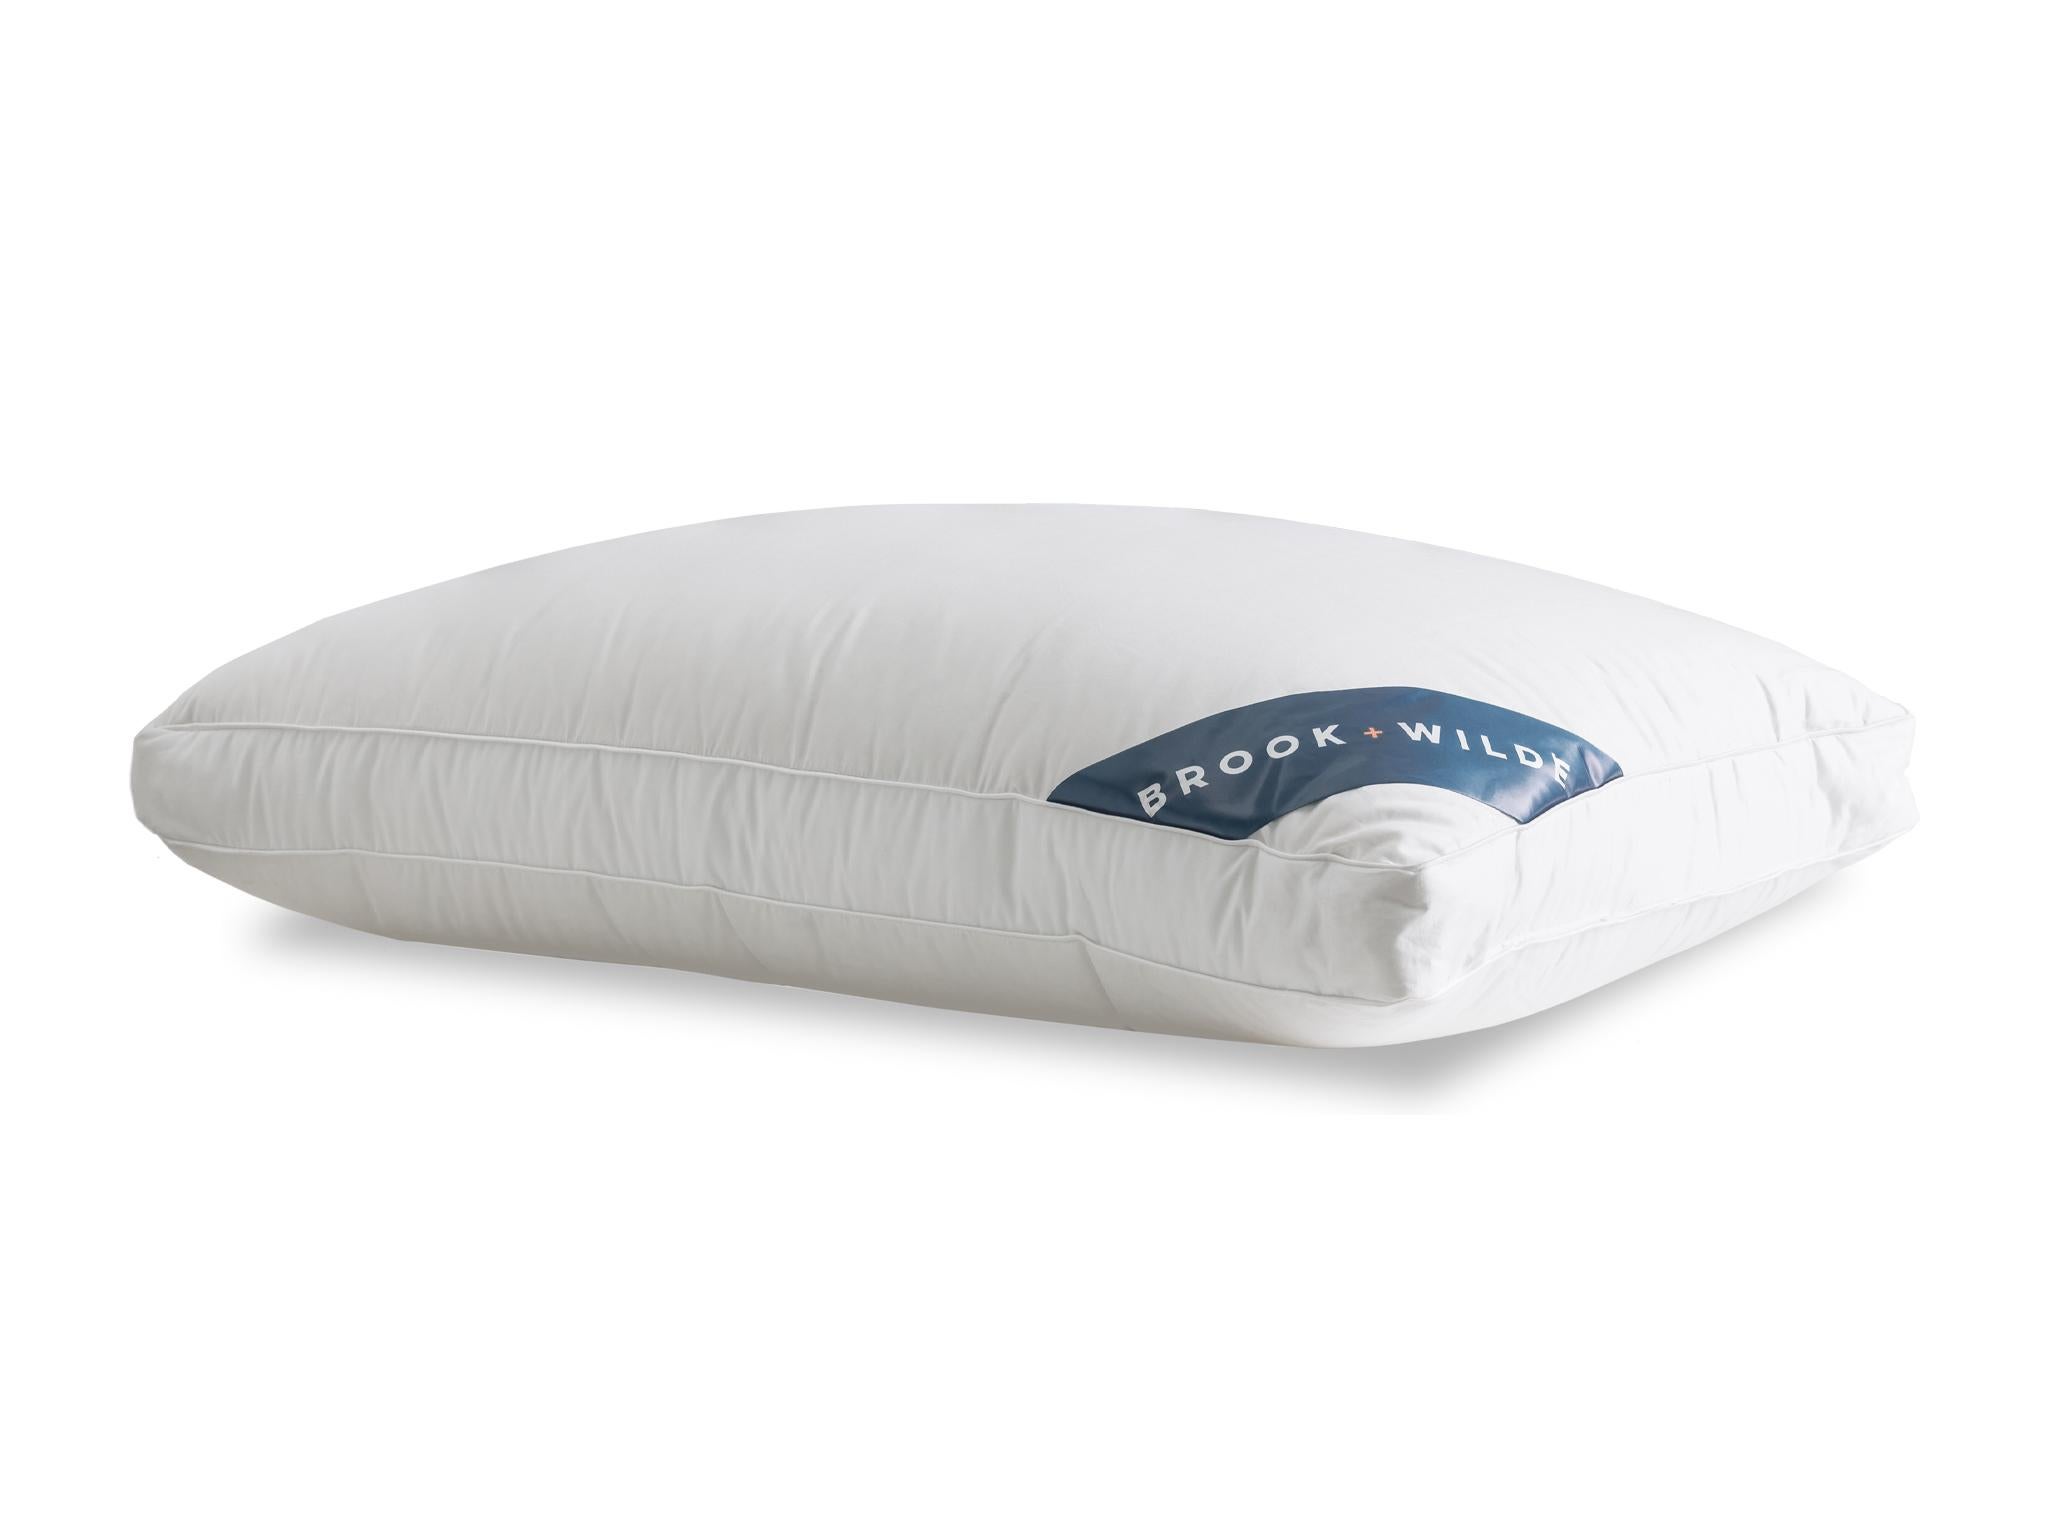 inflatable neck pillow argos